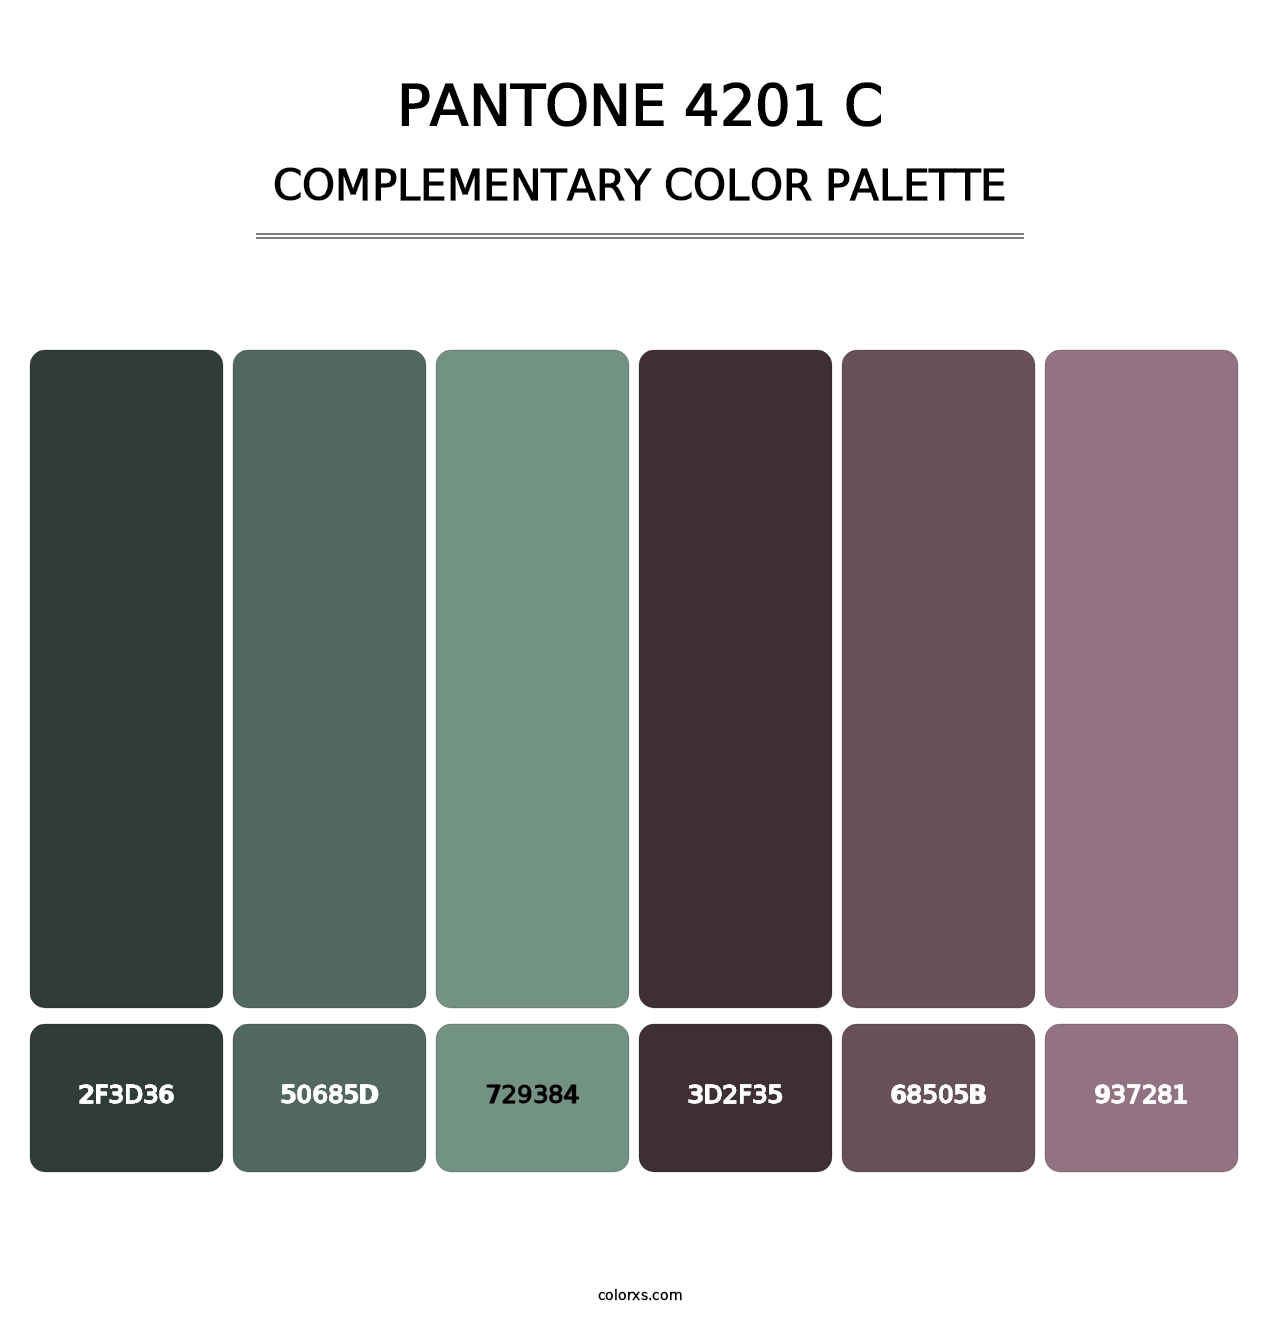 PANTONE 4201 C - Complementary Color Palette